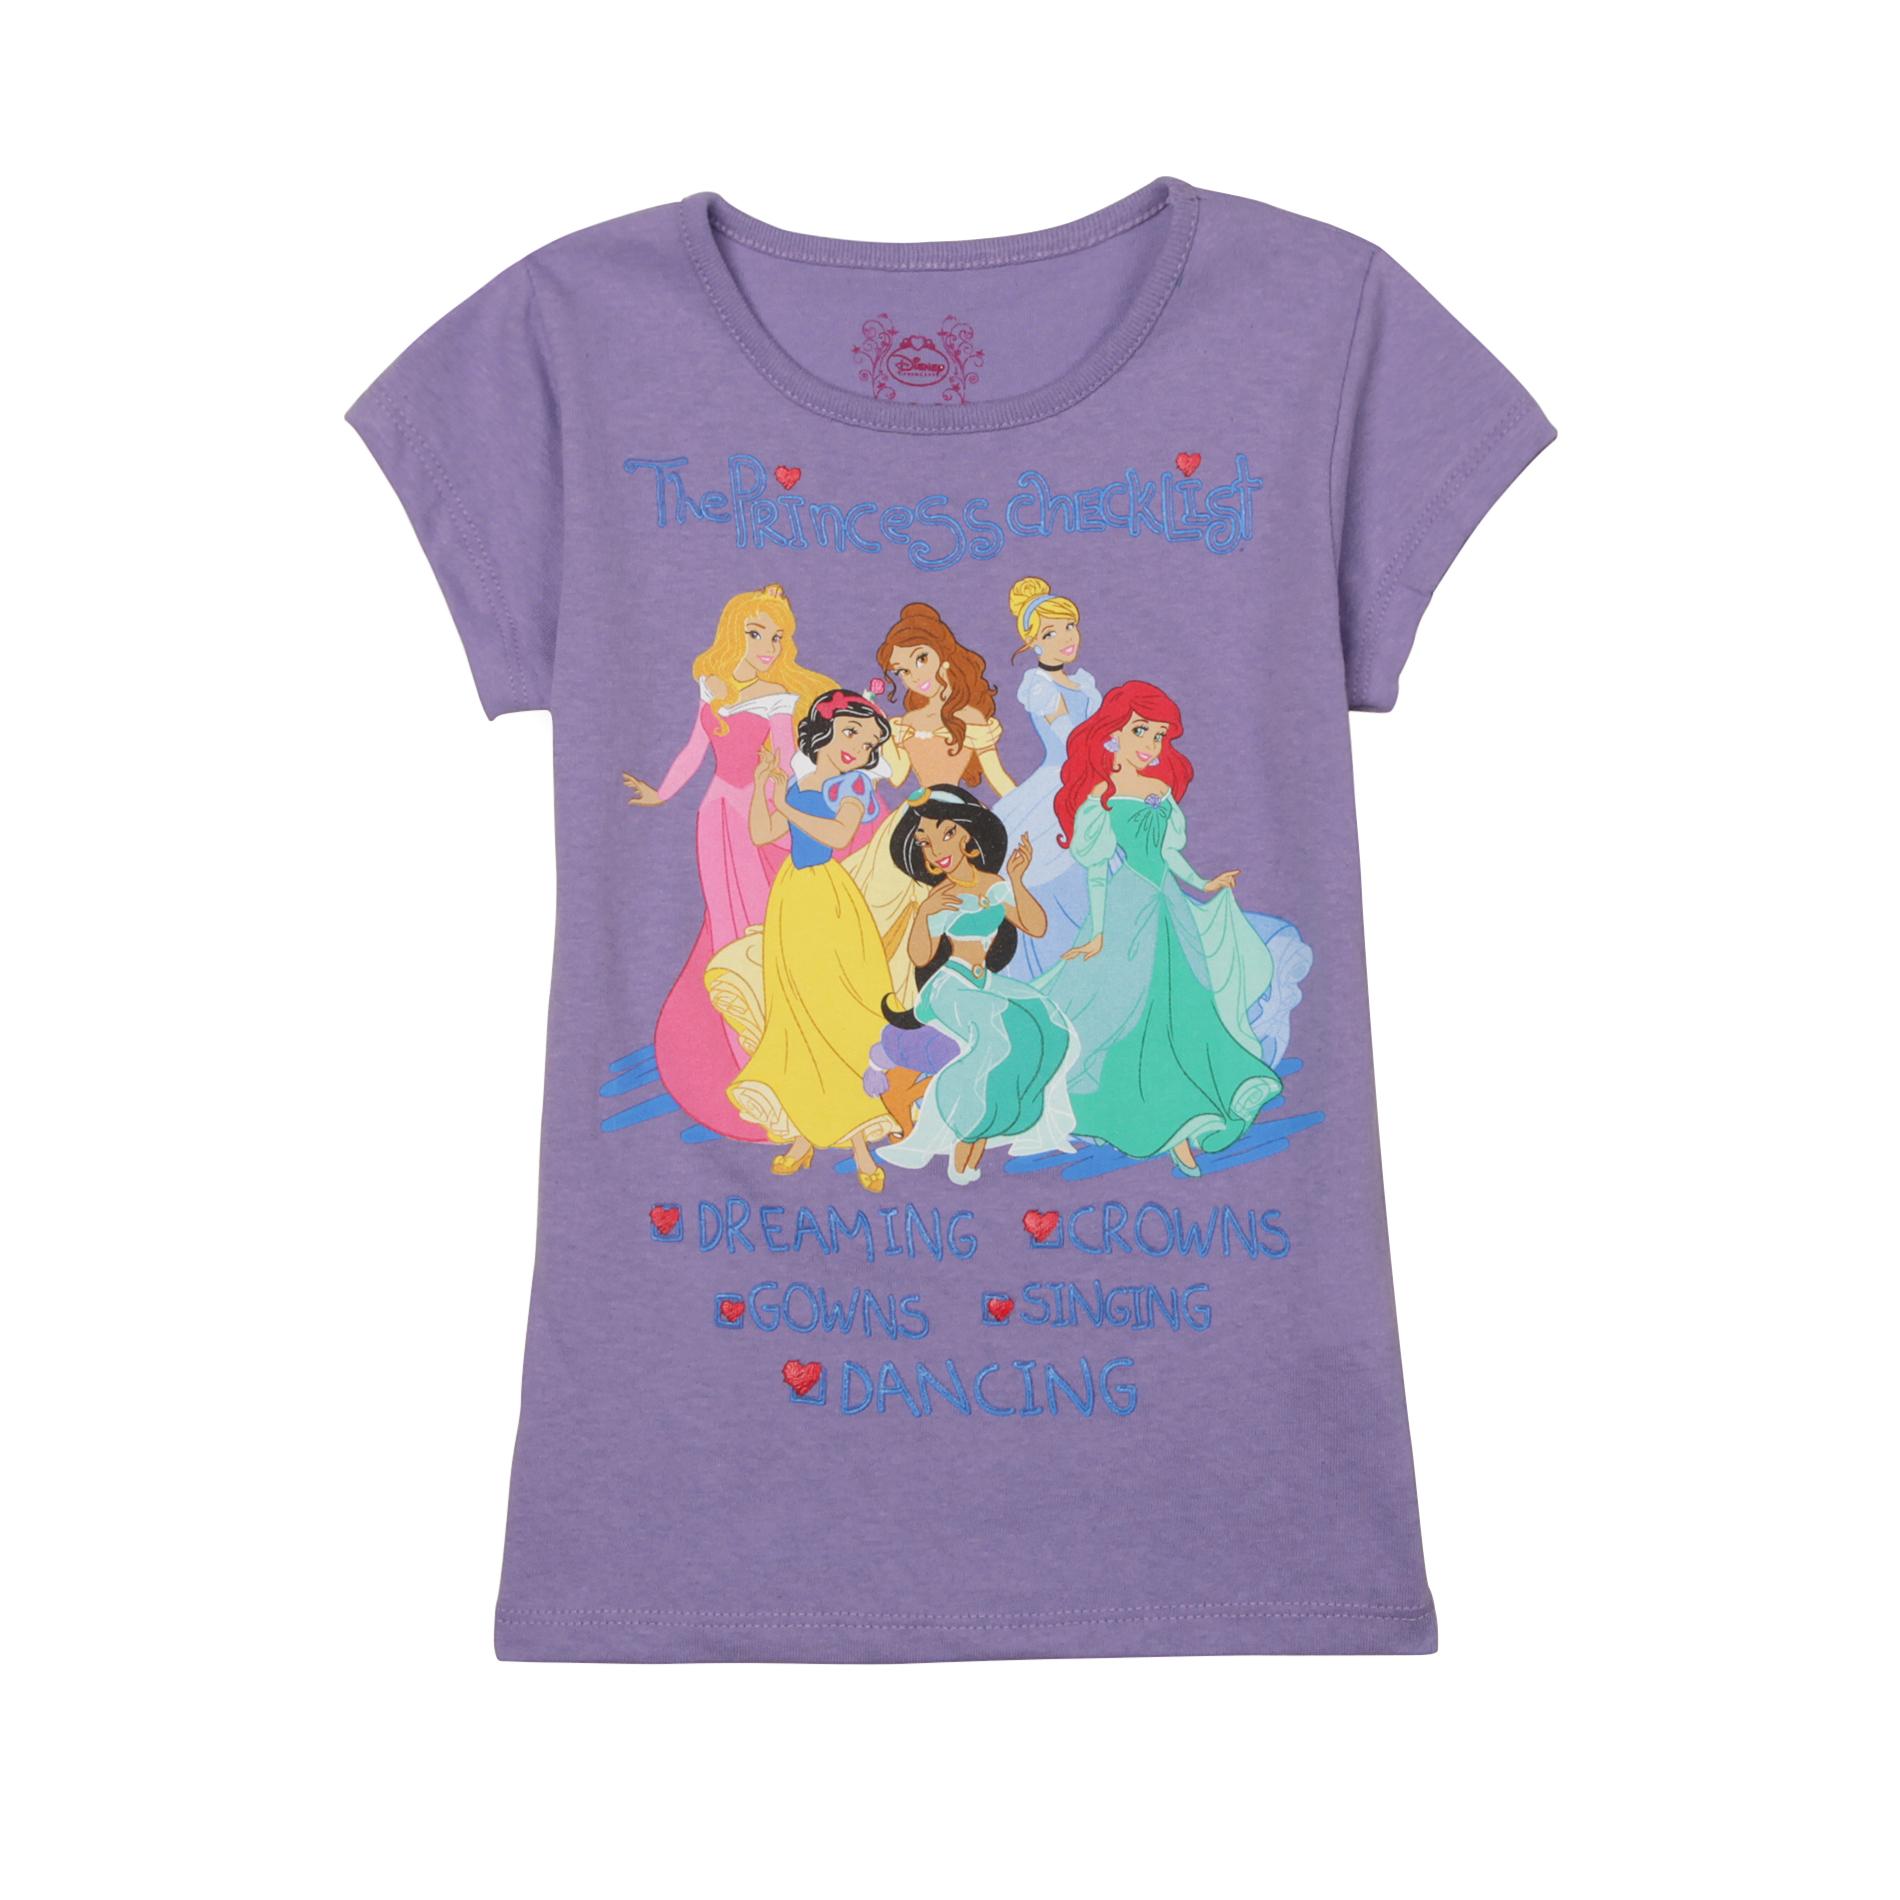 Disney Princess Girl's Short-Sleeve Top - Checklist